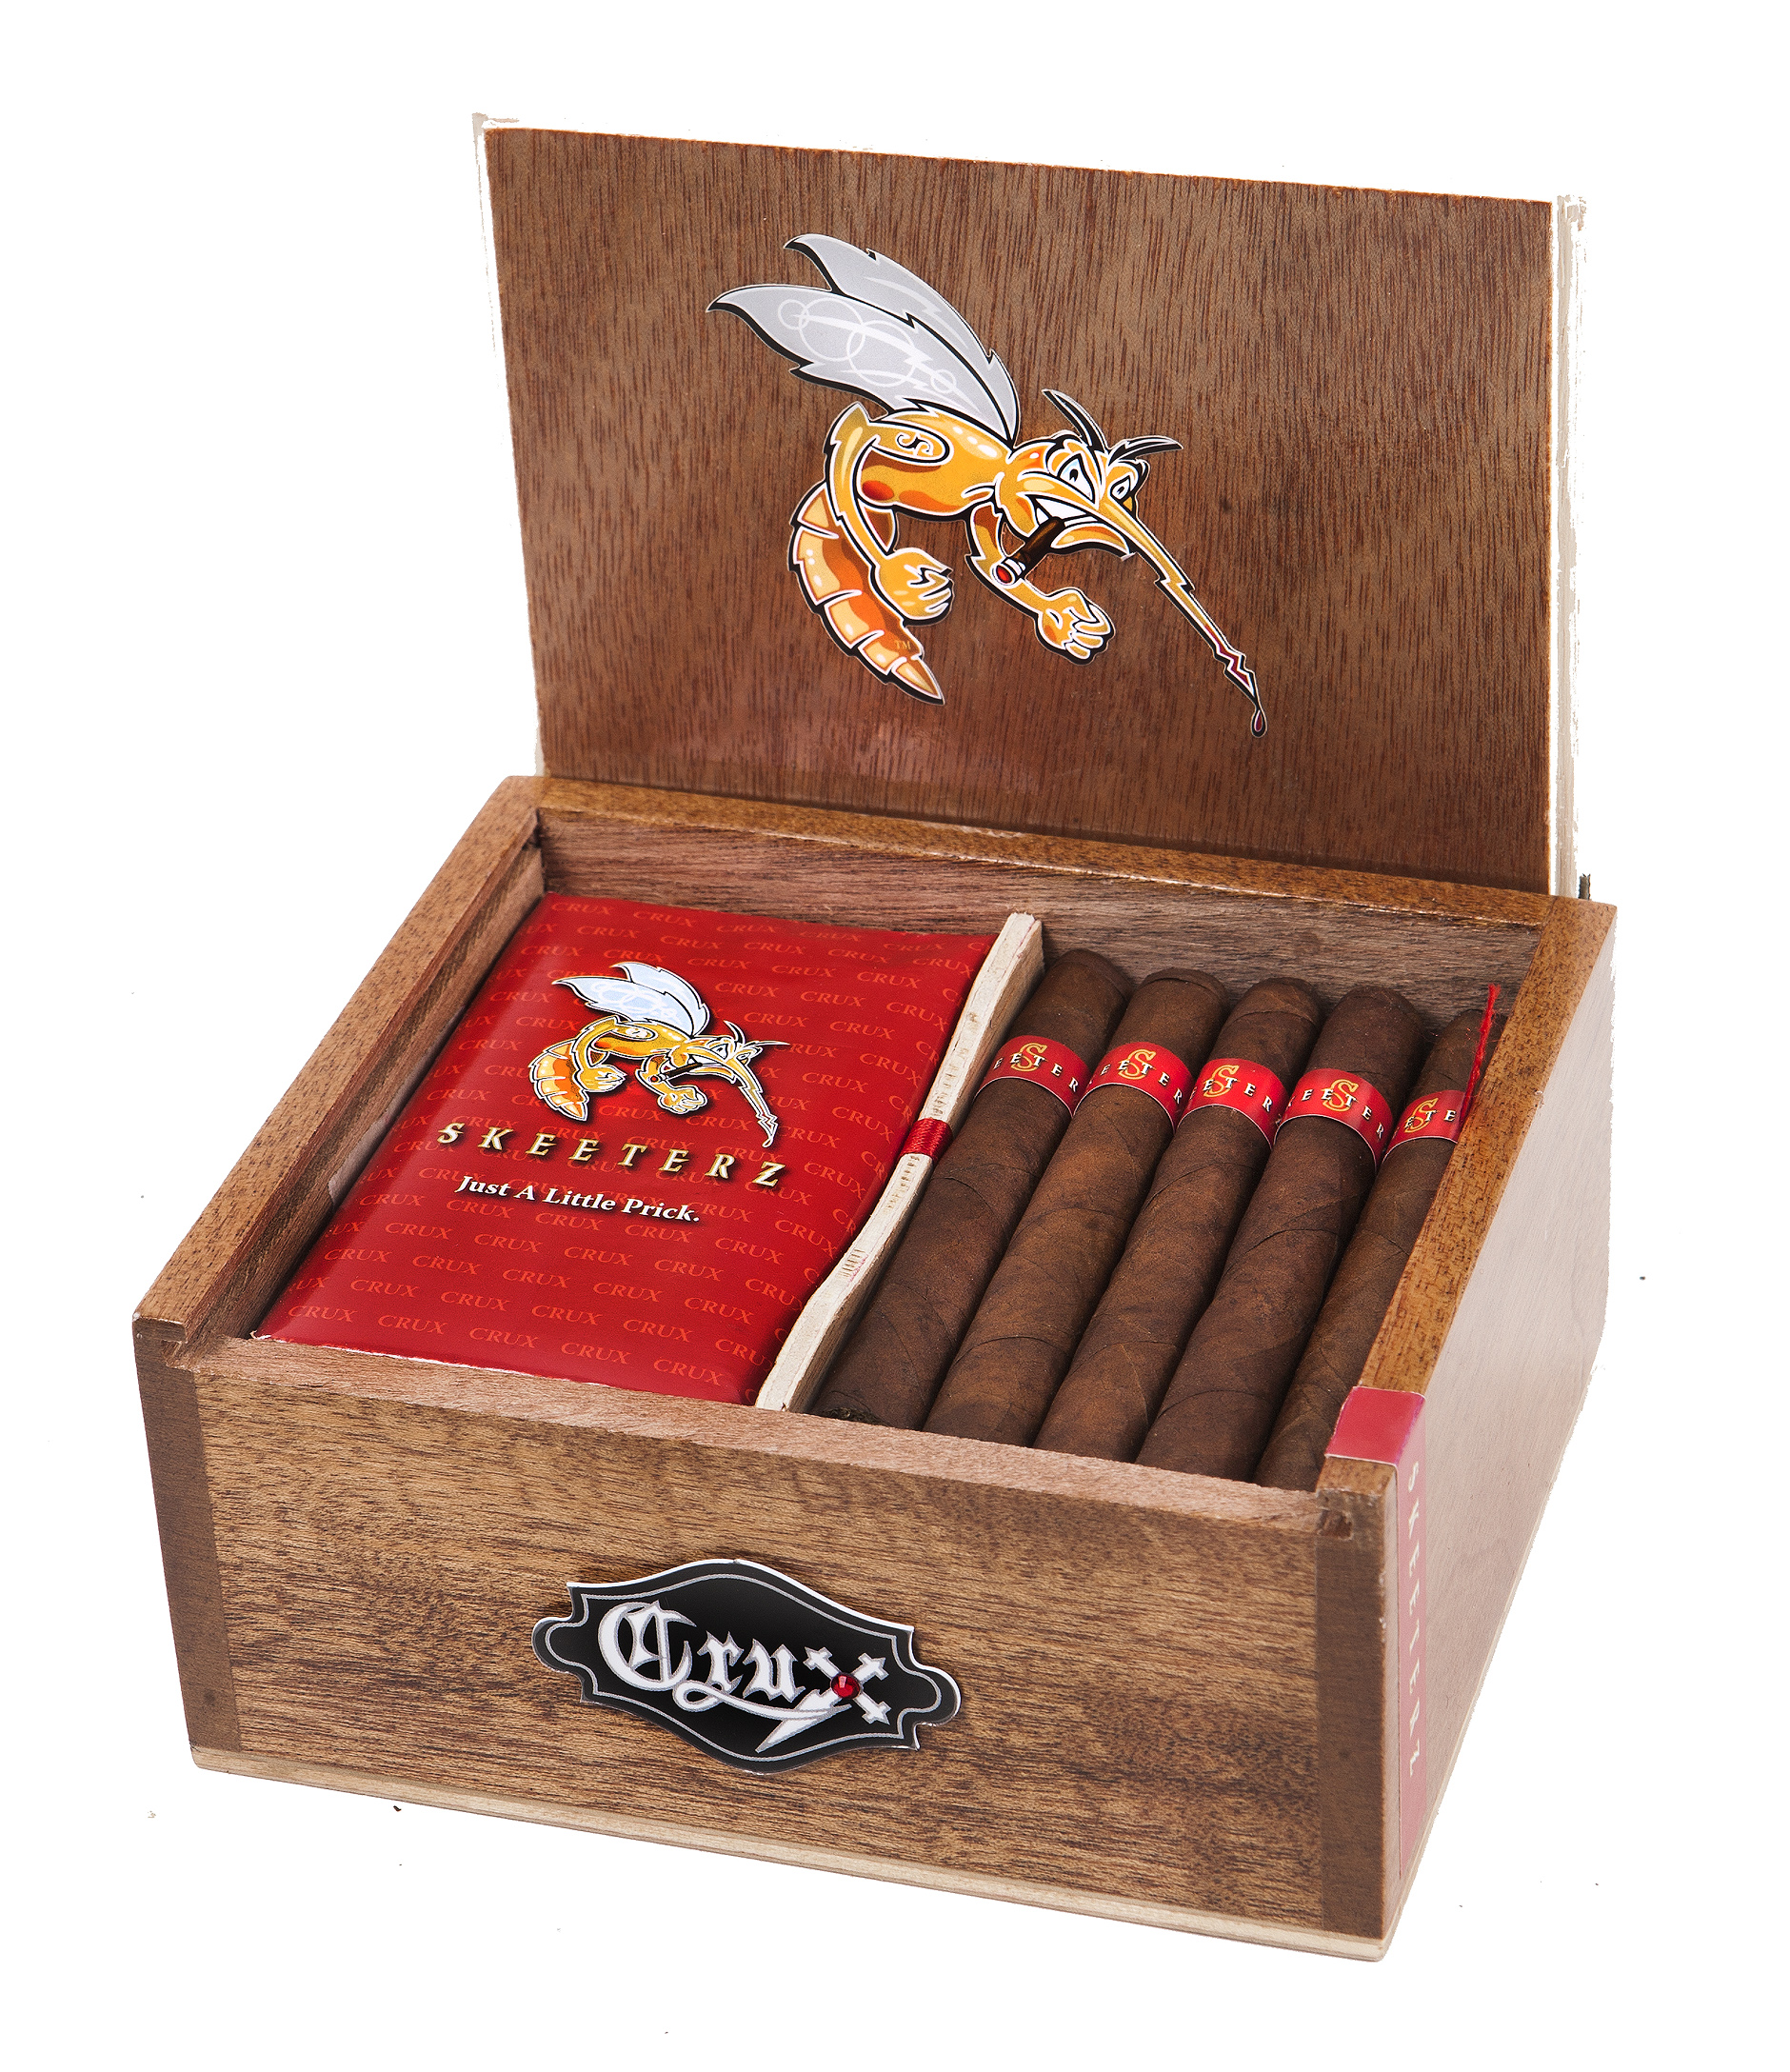 Crux Cigars Skeeterz Box 2